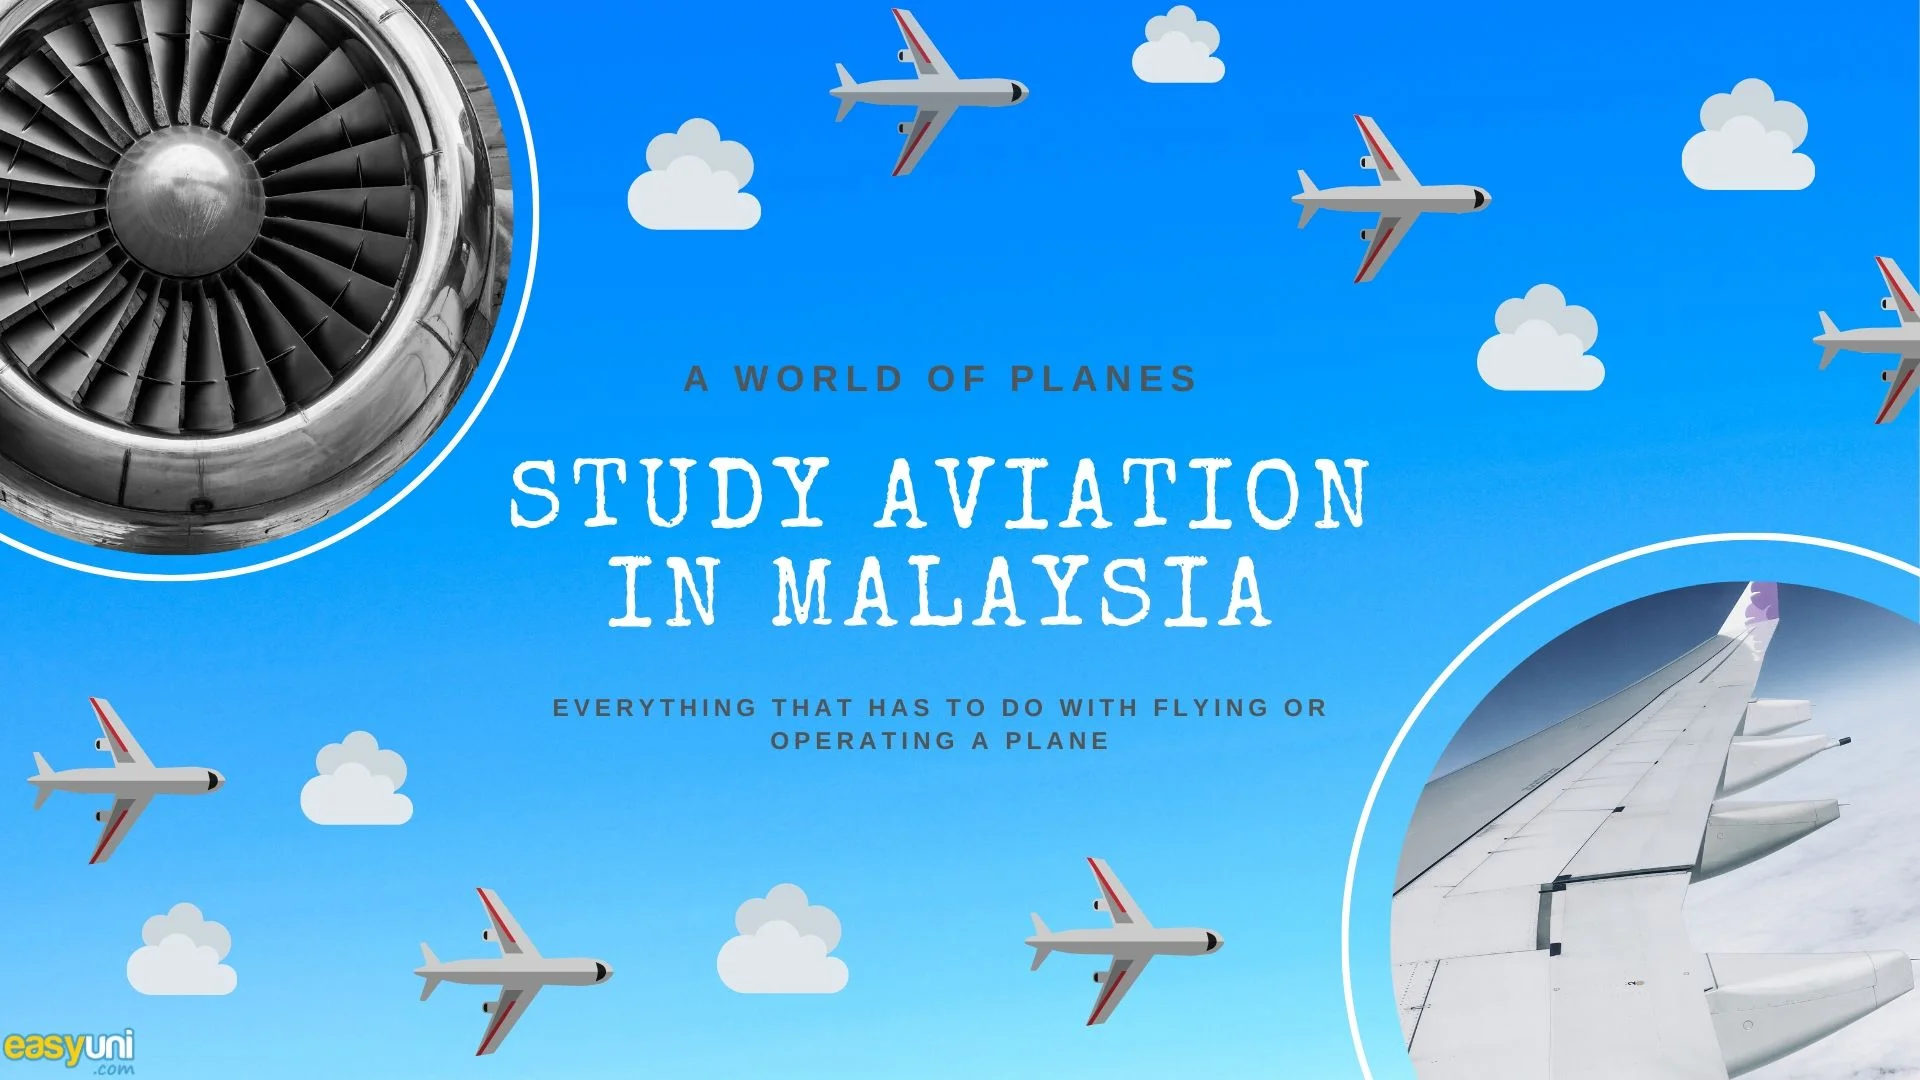 Study aviation in Malaysia.